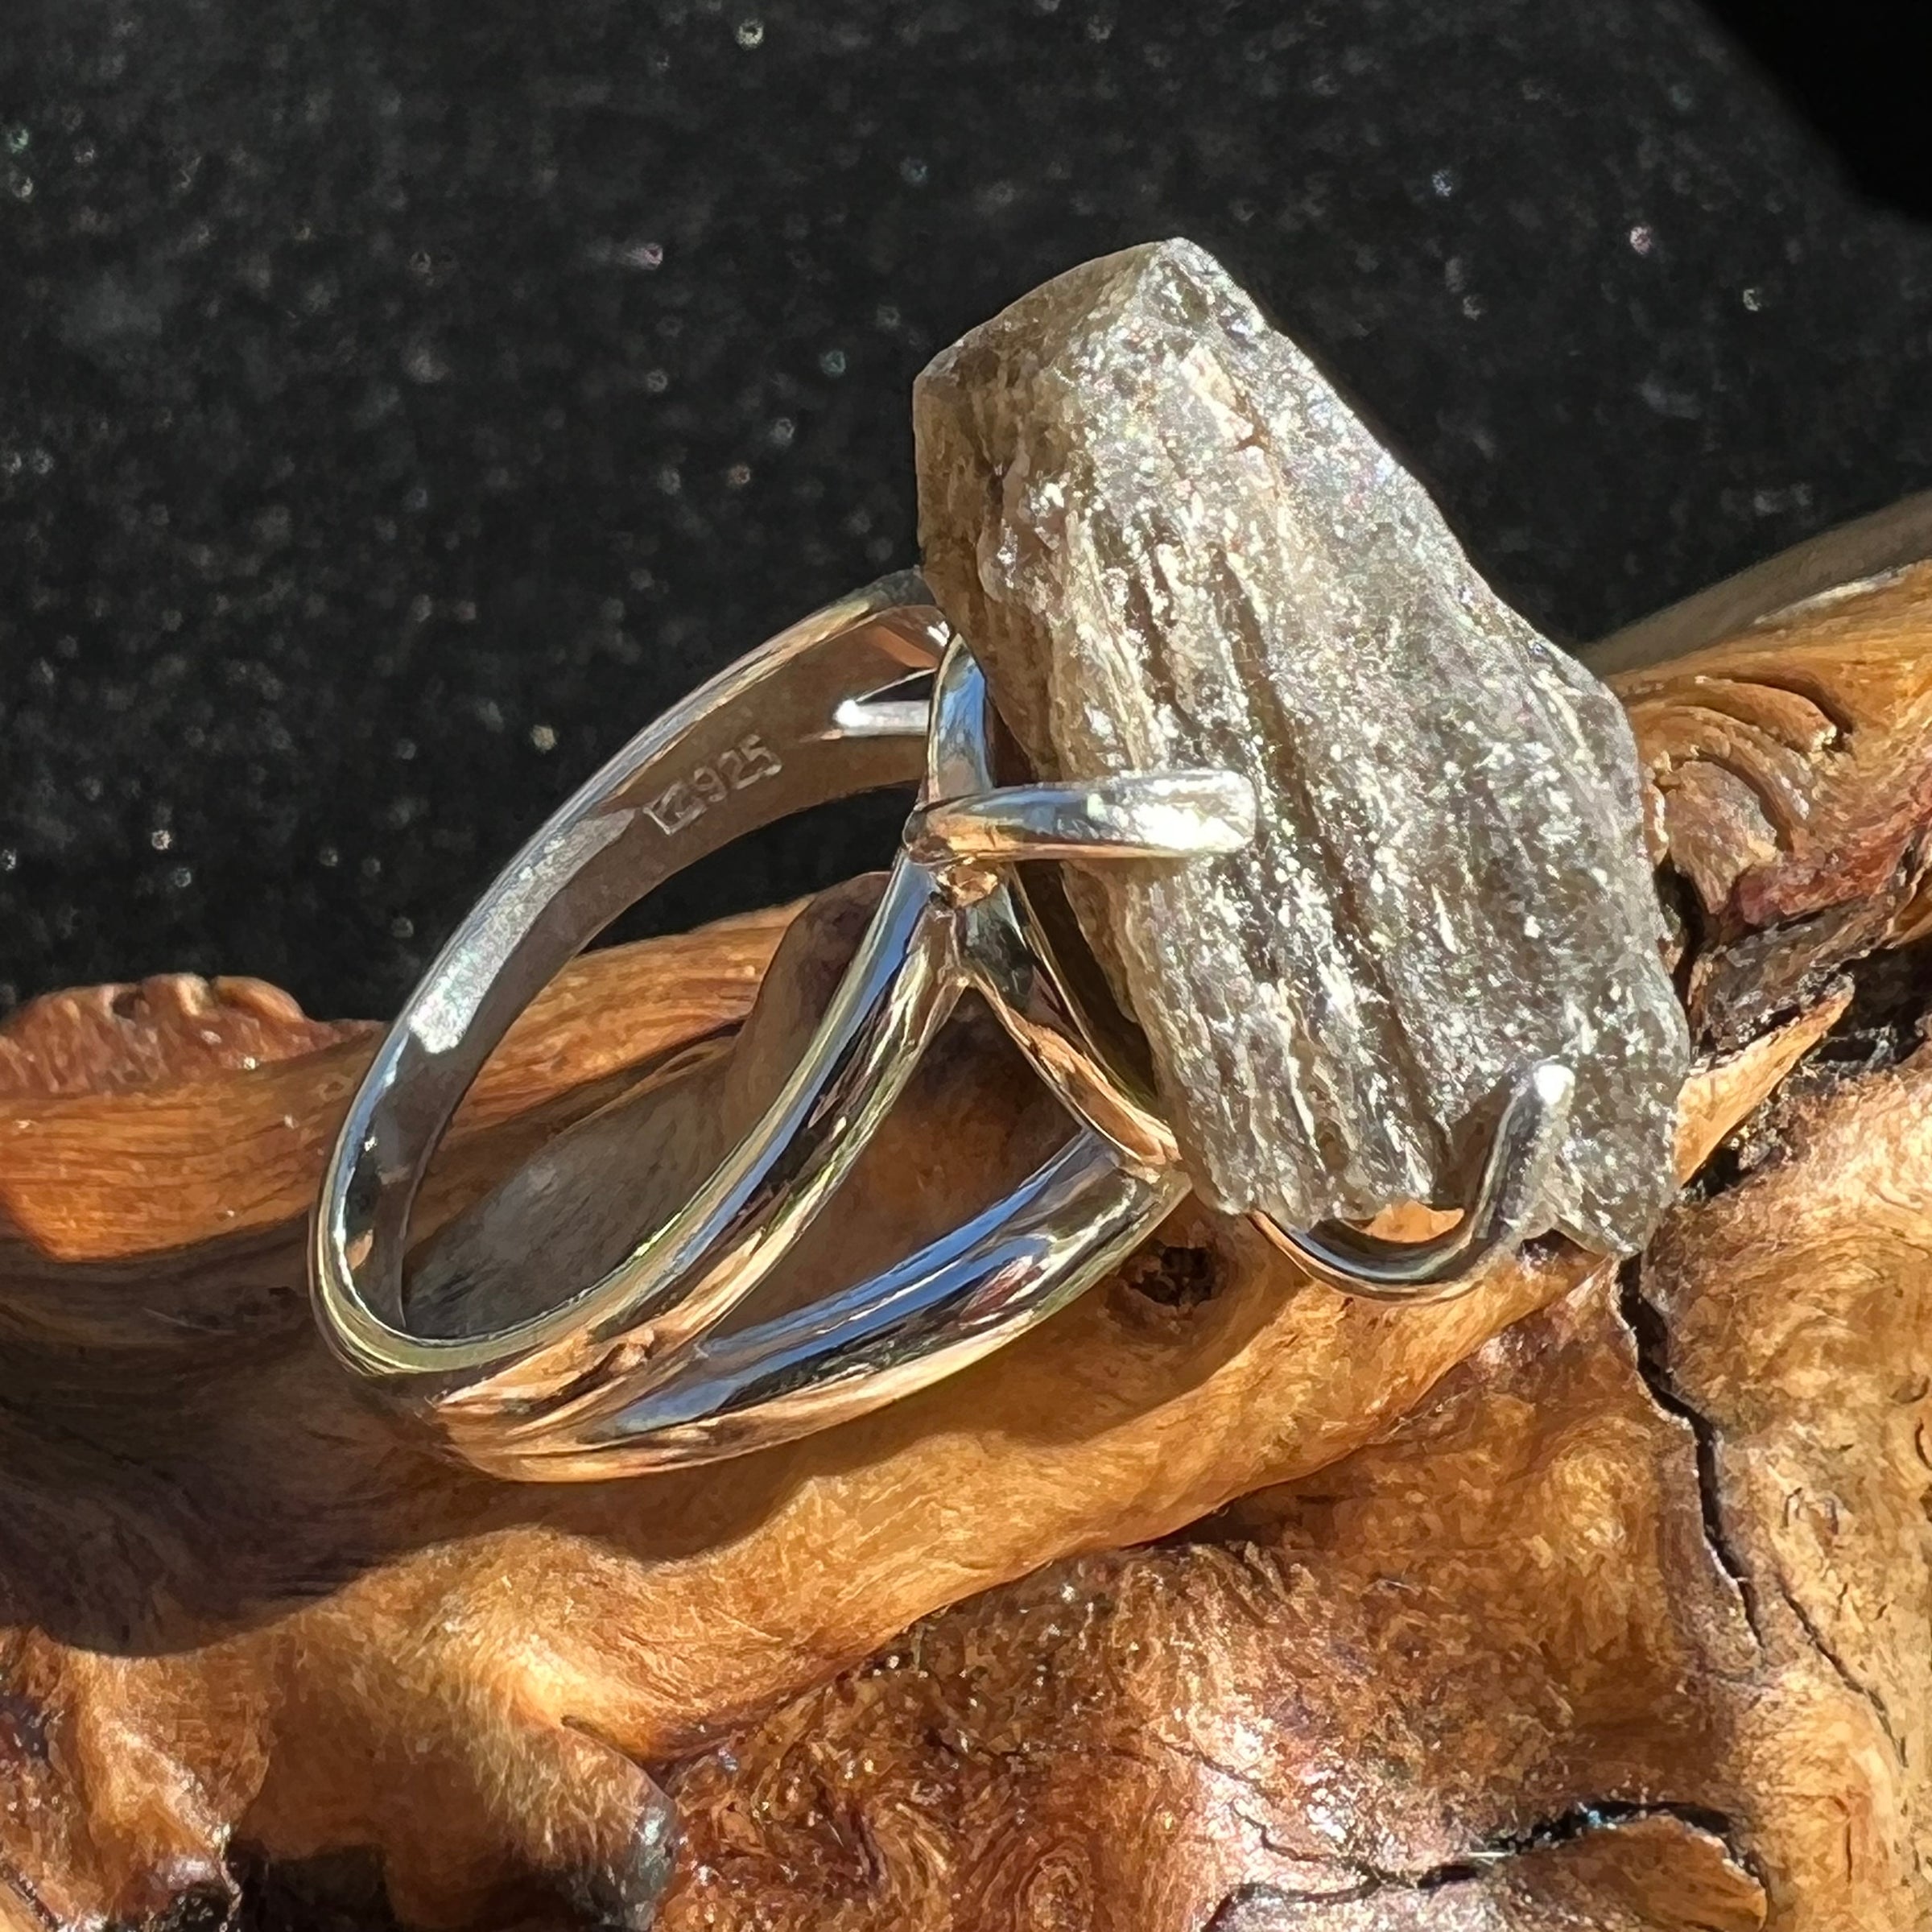 Darwinite Ring Size 7 Sterling Silver 2091-Moldavite Life